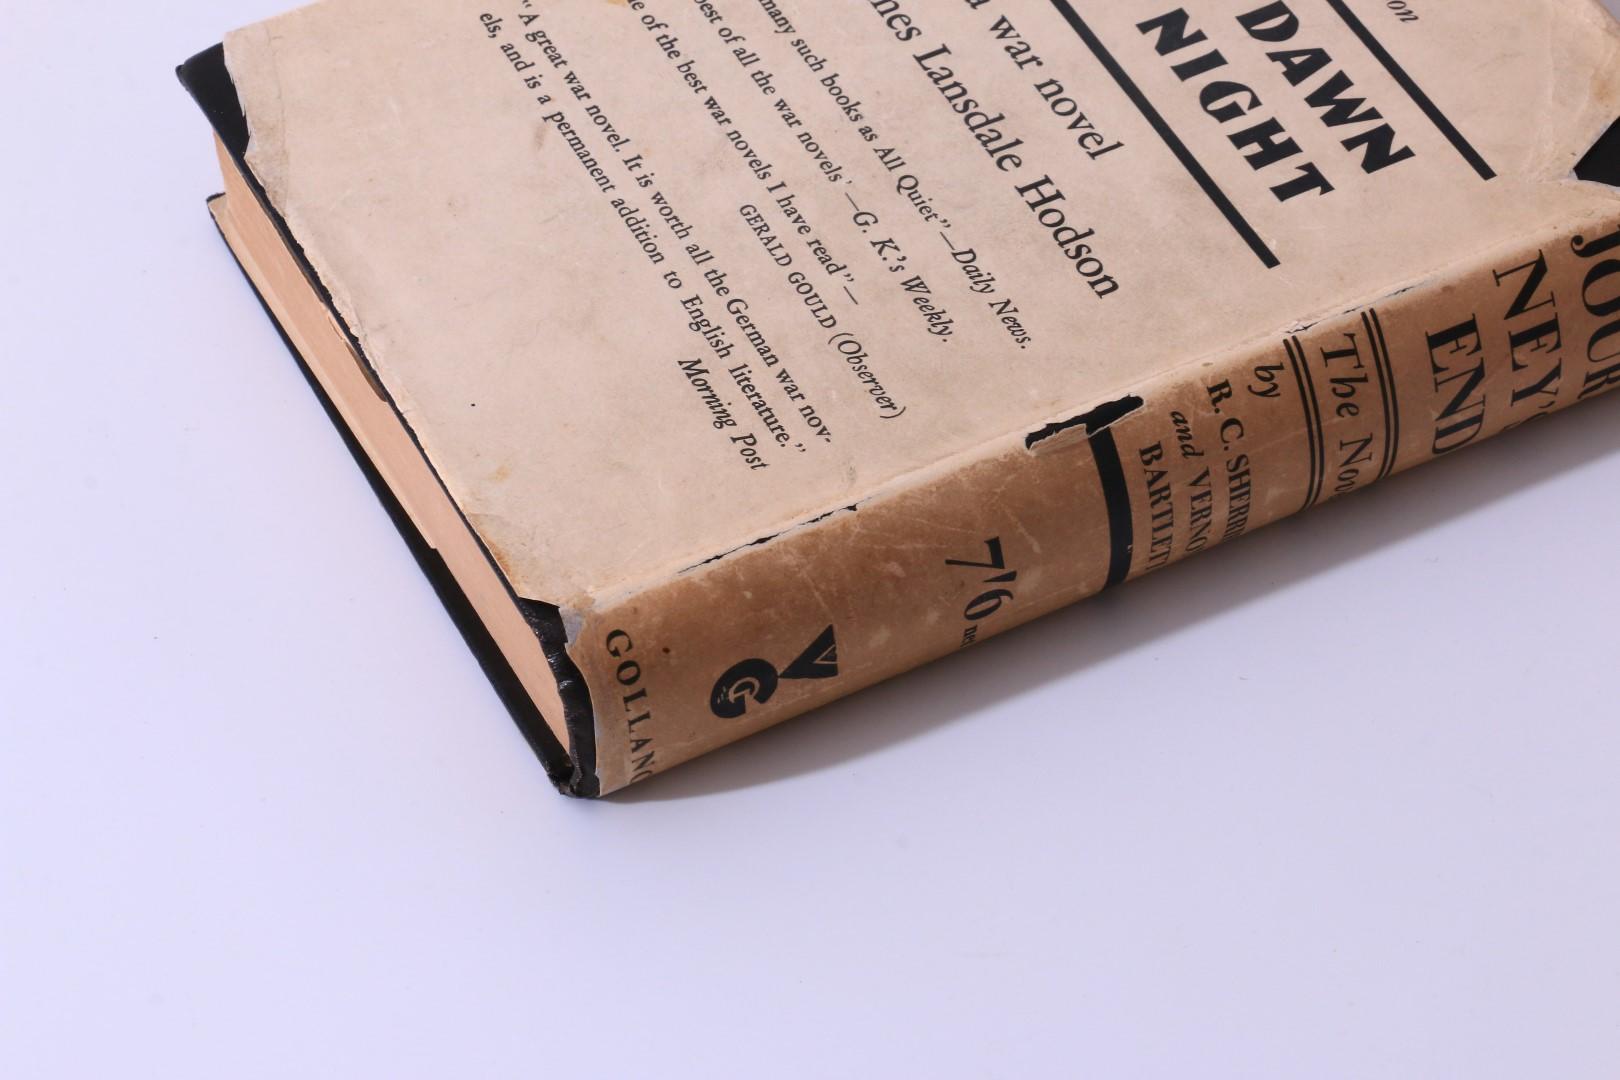 R.C. Sherriff & Vernon Bartlett - Journey's End - Gollancz, 1930, First Edition.